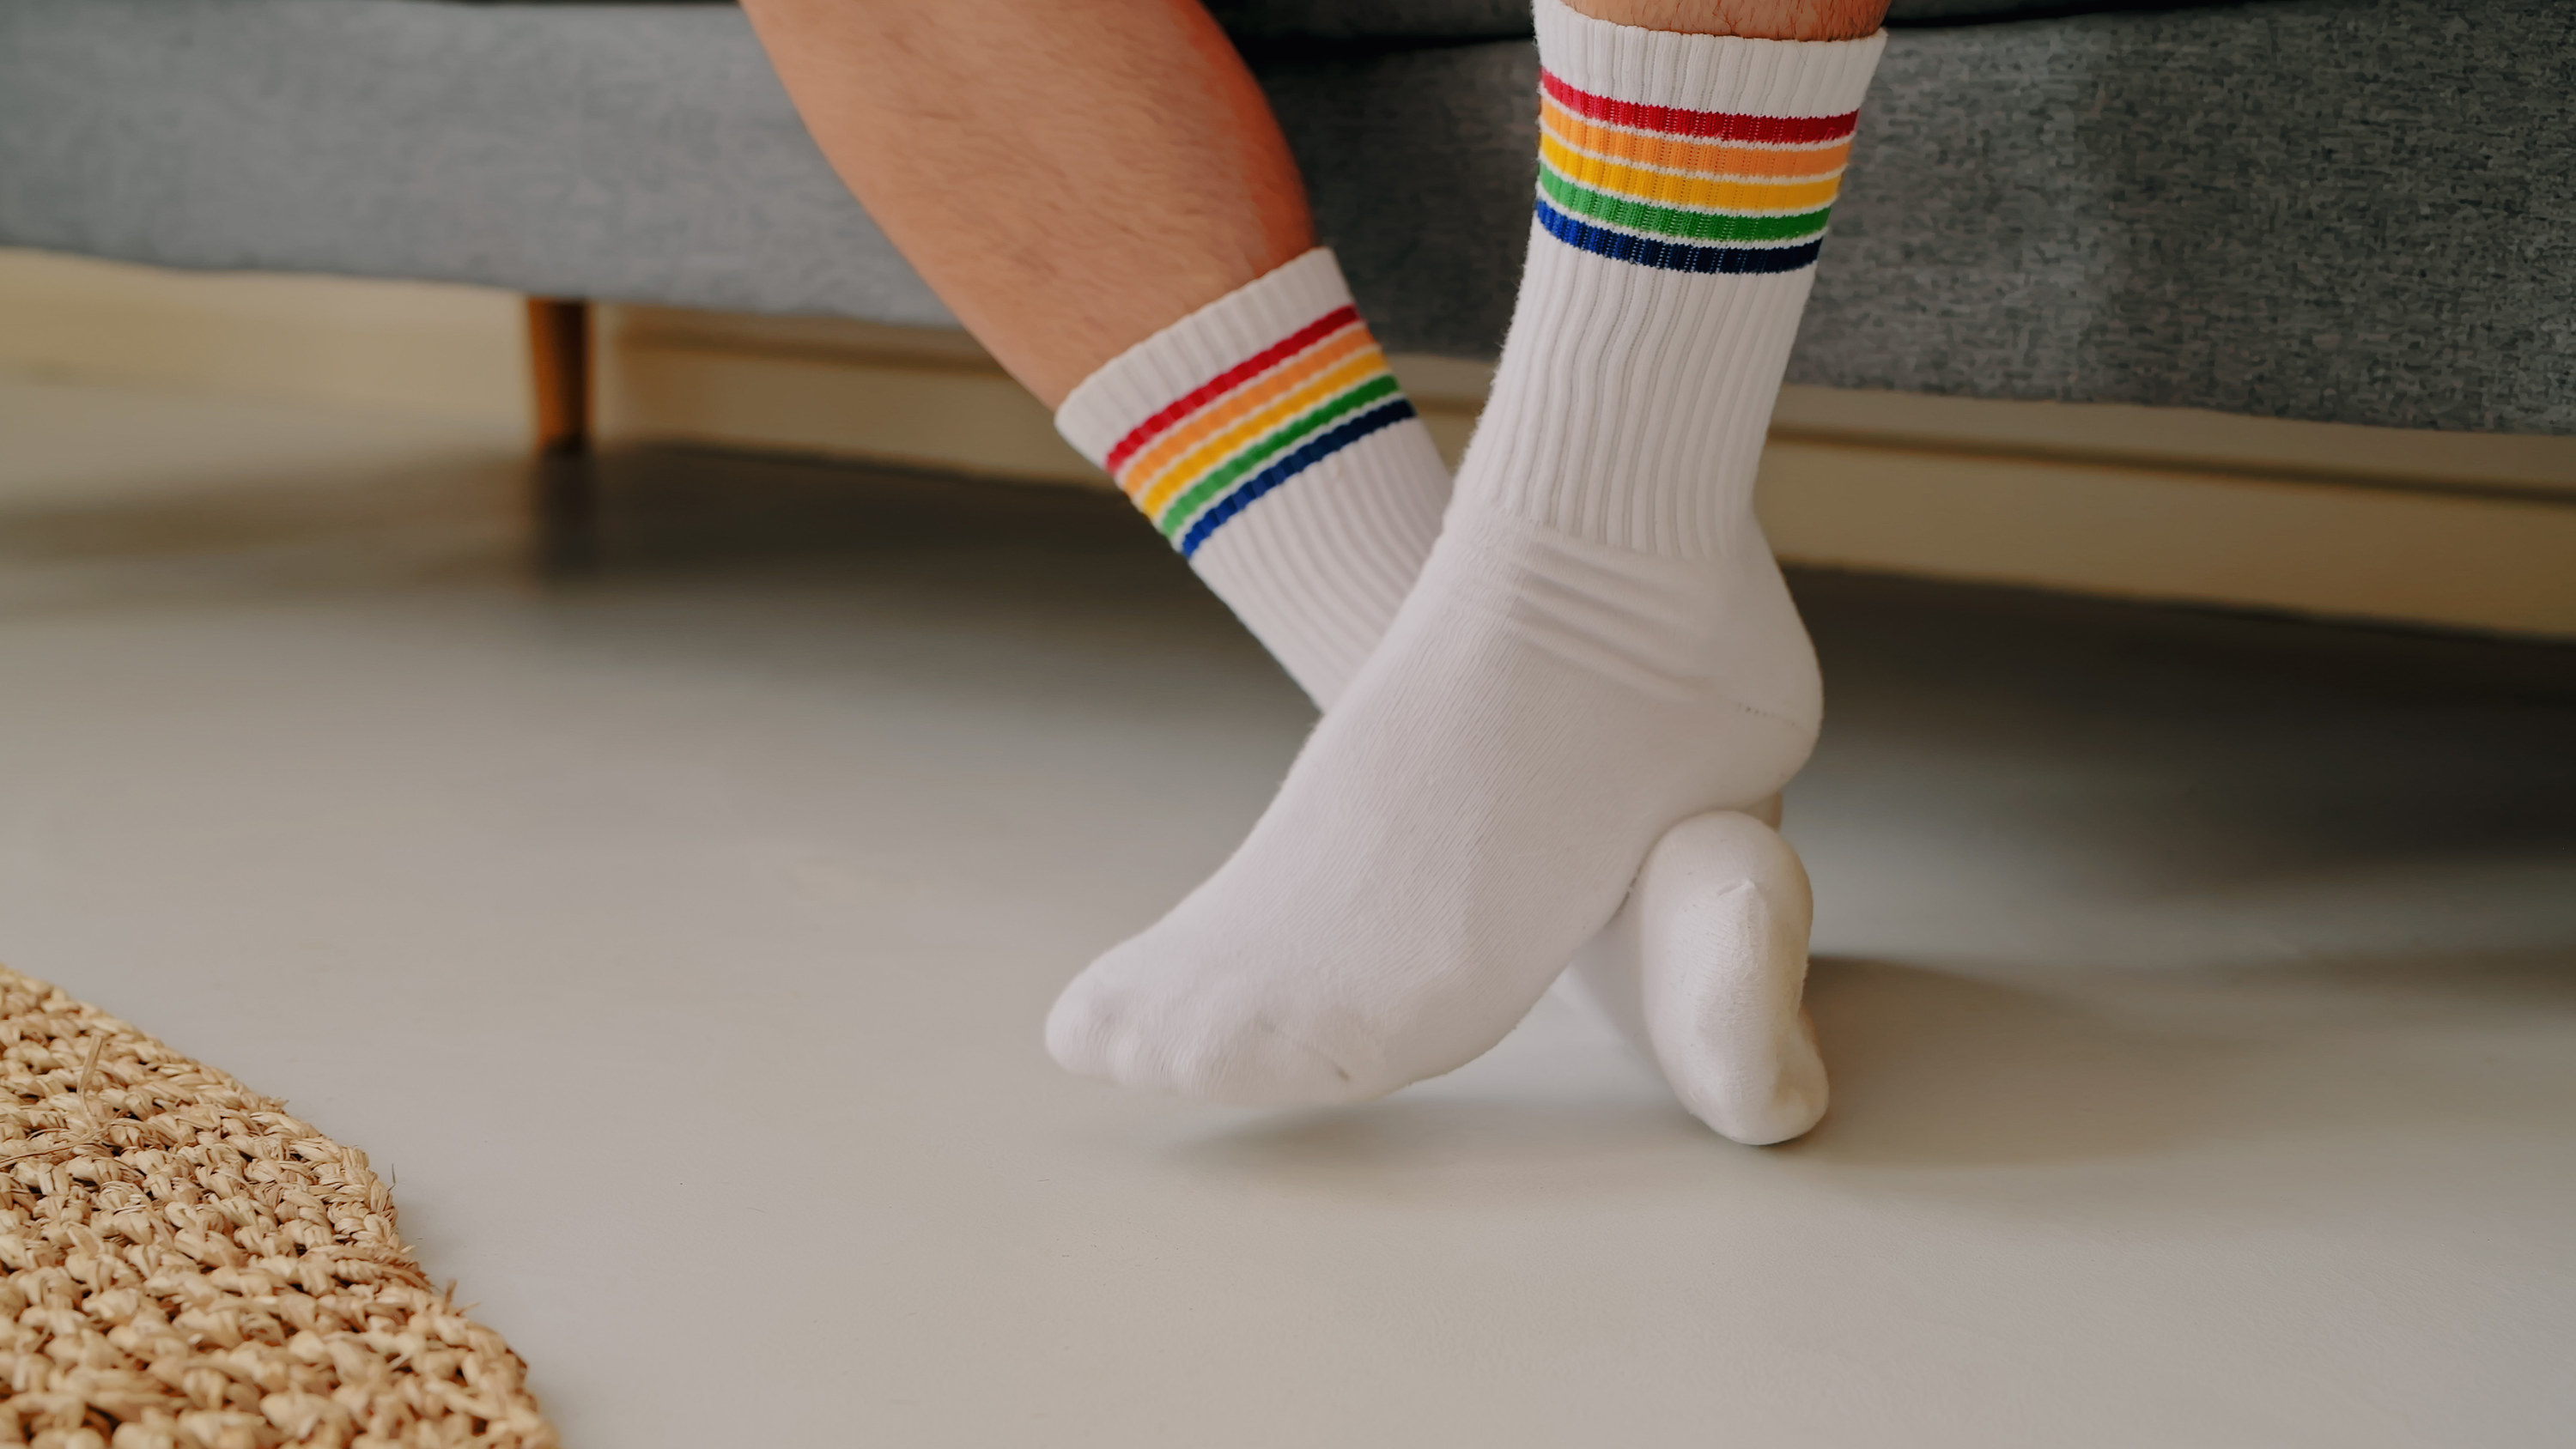 Feet wearing white tube socks with rainbow stripes on them